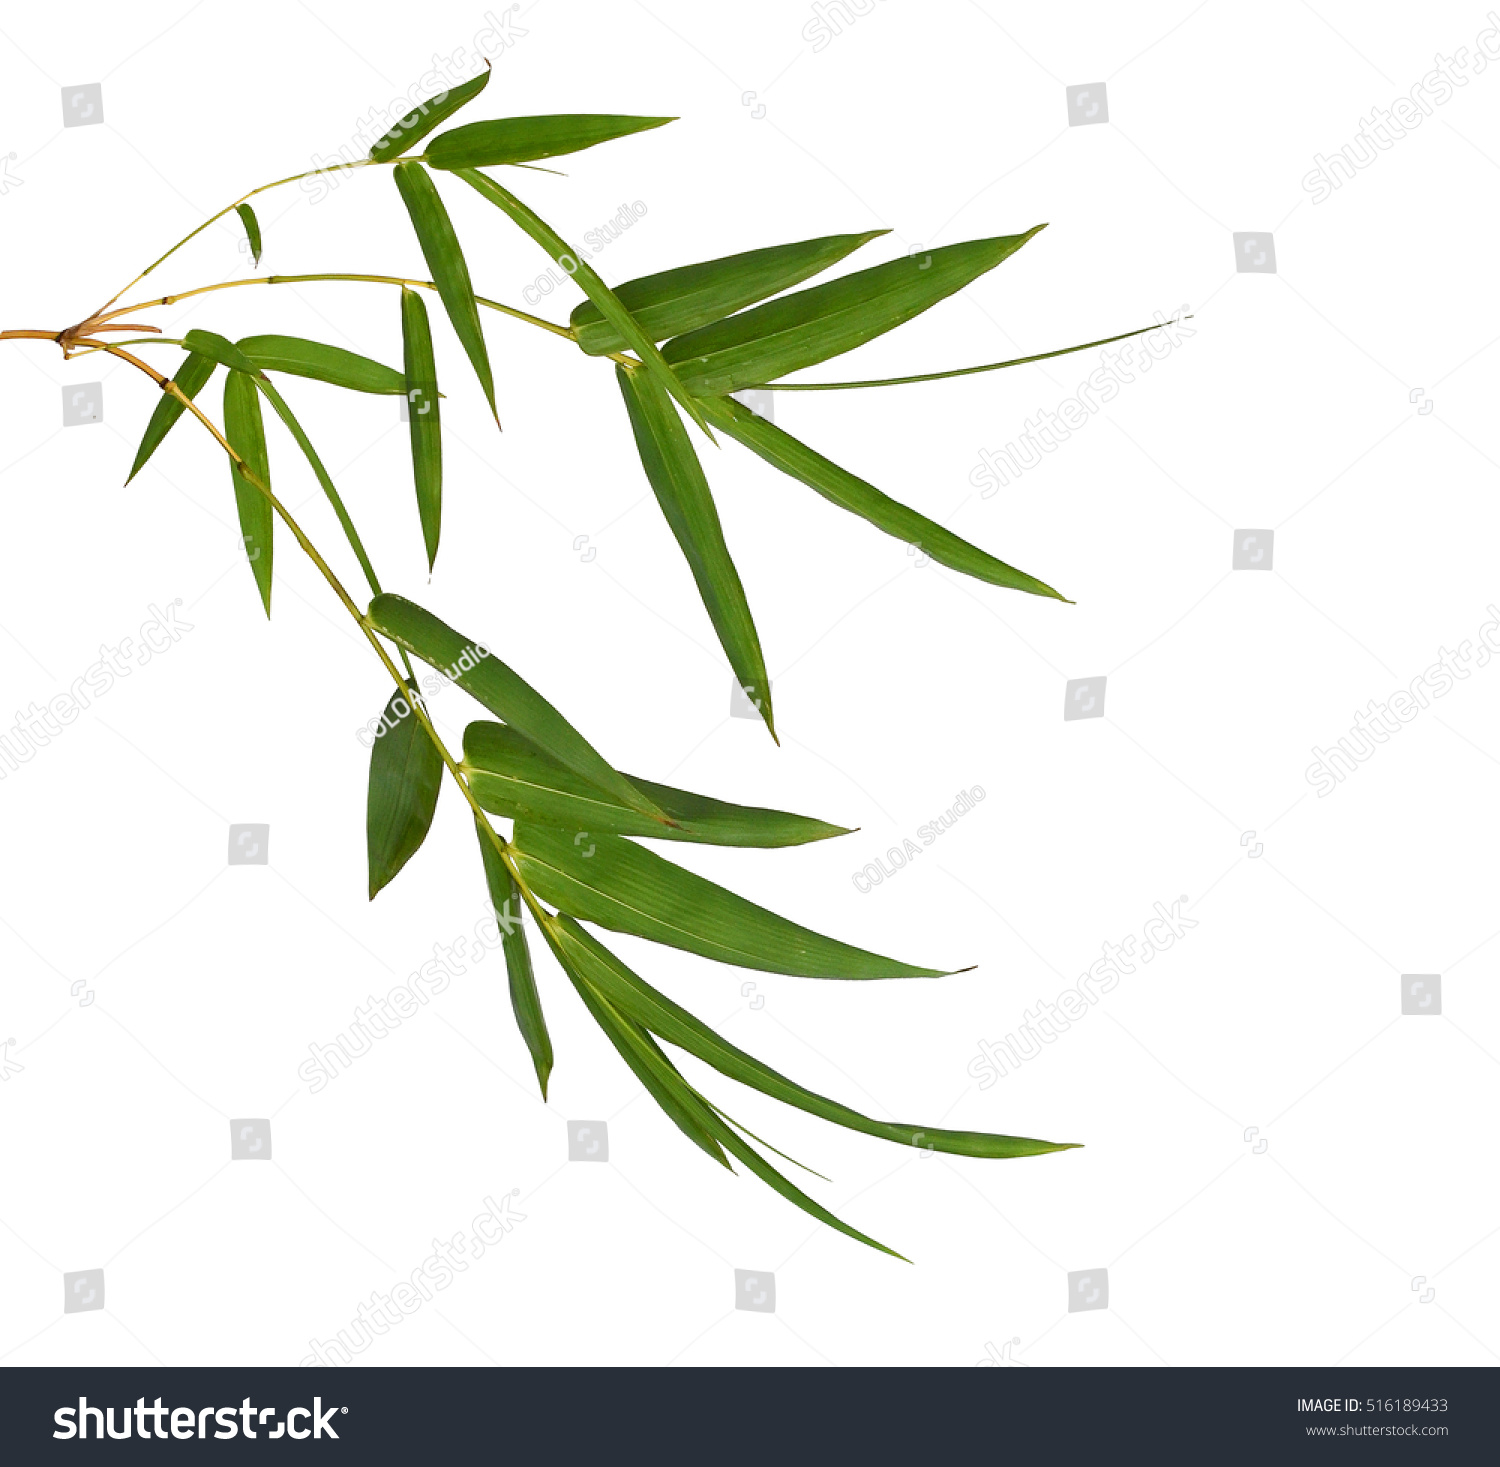 Bamboo Leaves Isolated On White Background Stock Photo 516189433 ...